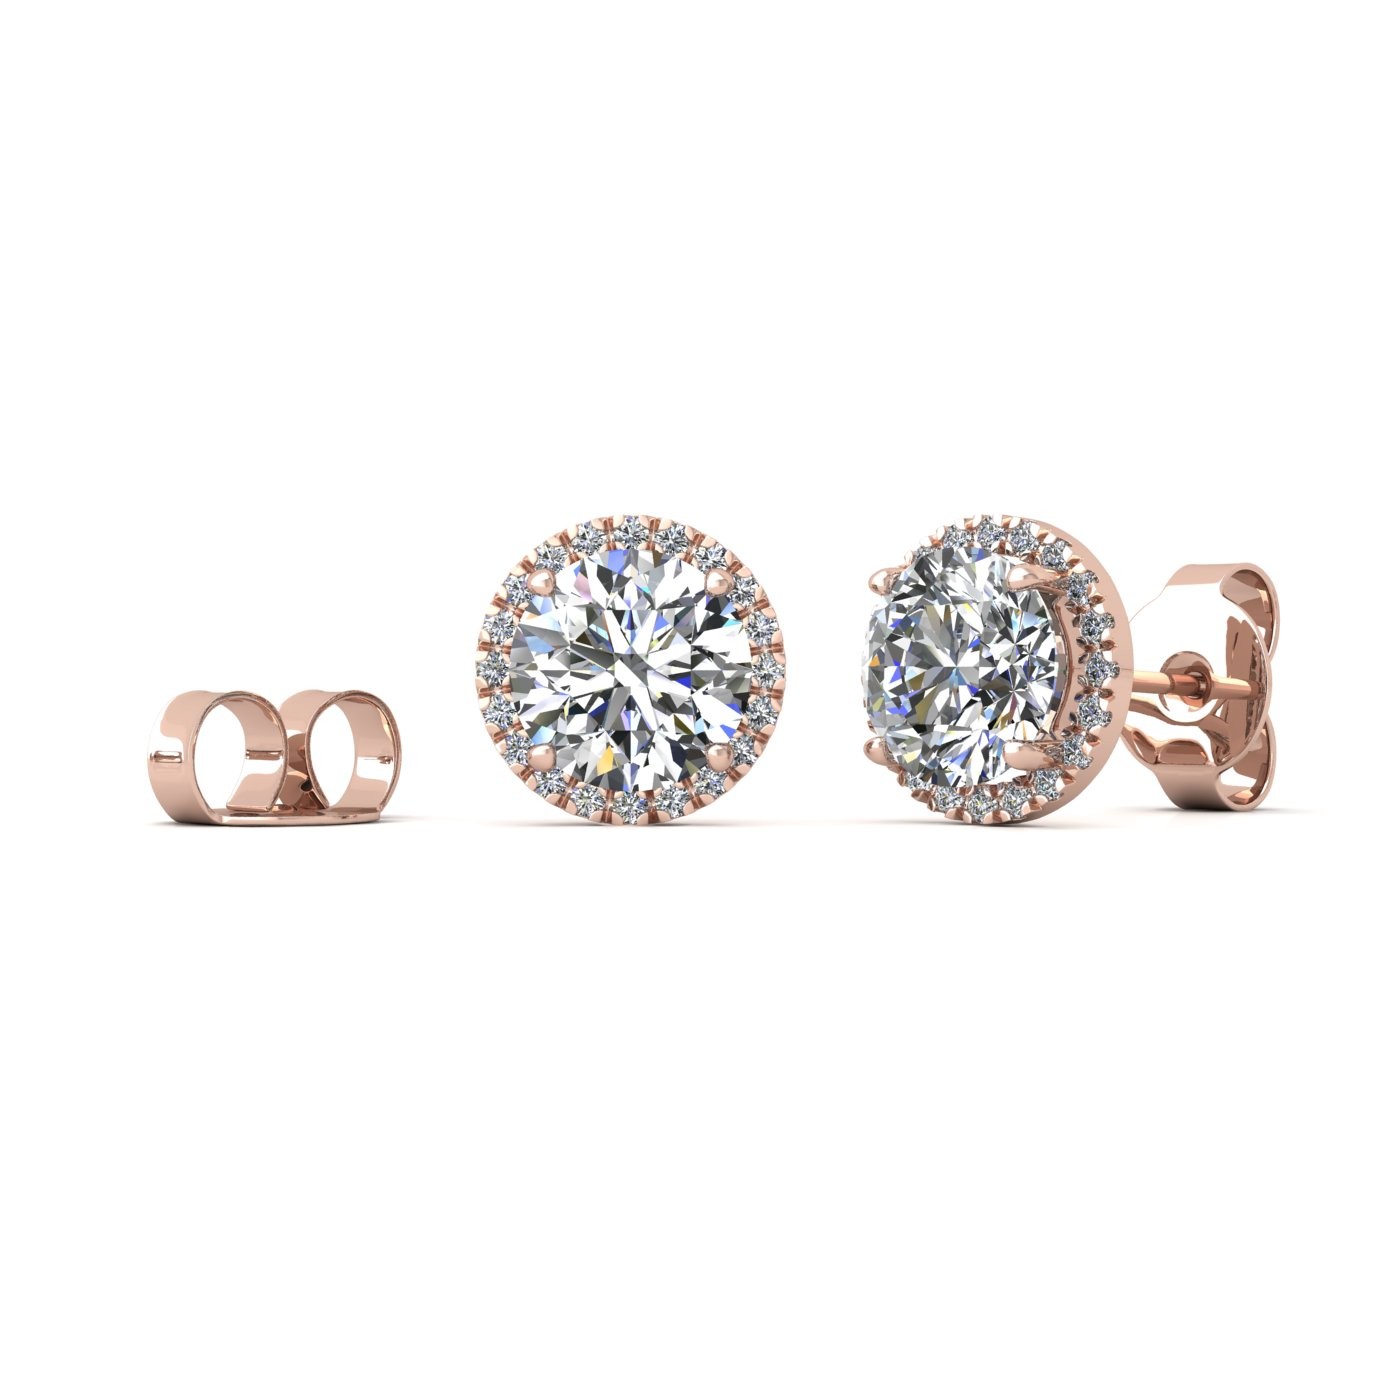 18k rose gold 1,5 ct each (3,0 tcw) 4 prongs round shape diamond earrings with diamond pavÉ set halo Photos & images